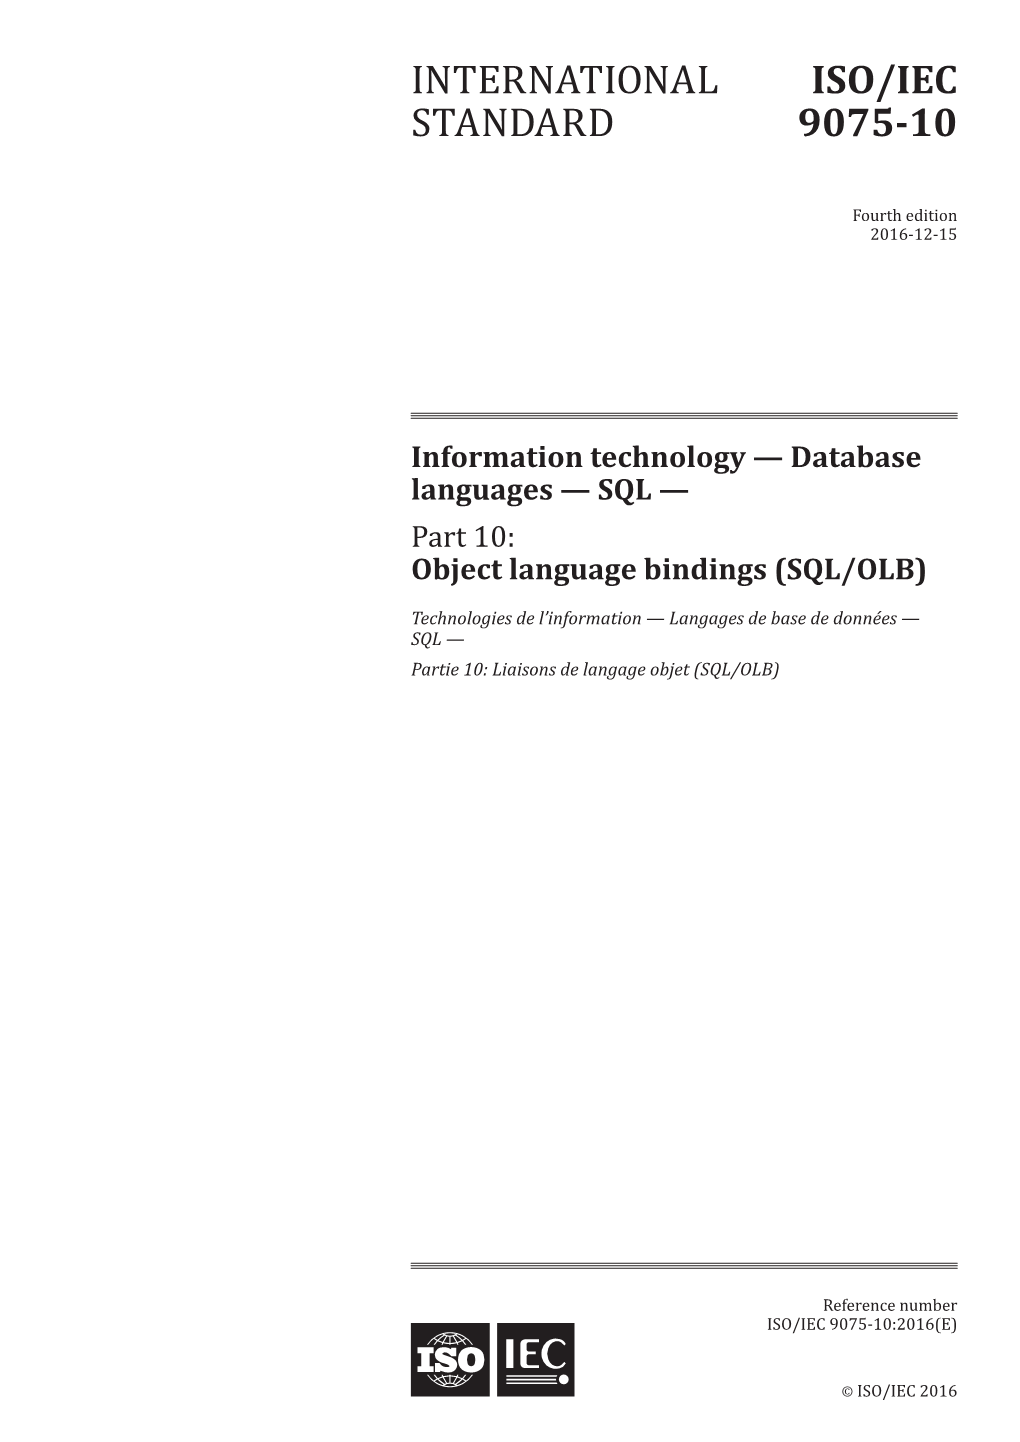 SQL — Part 10: Object Language Bindings (SQL/OLB)